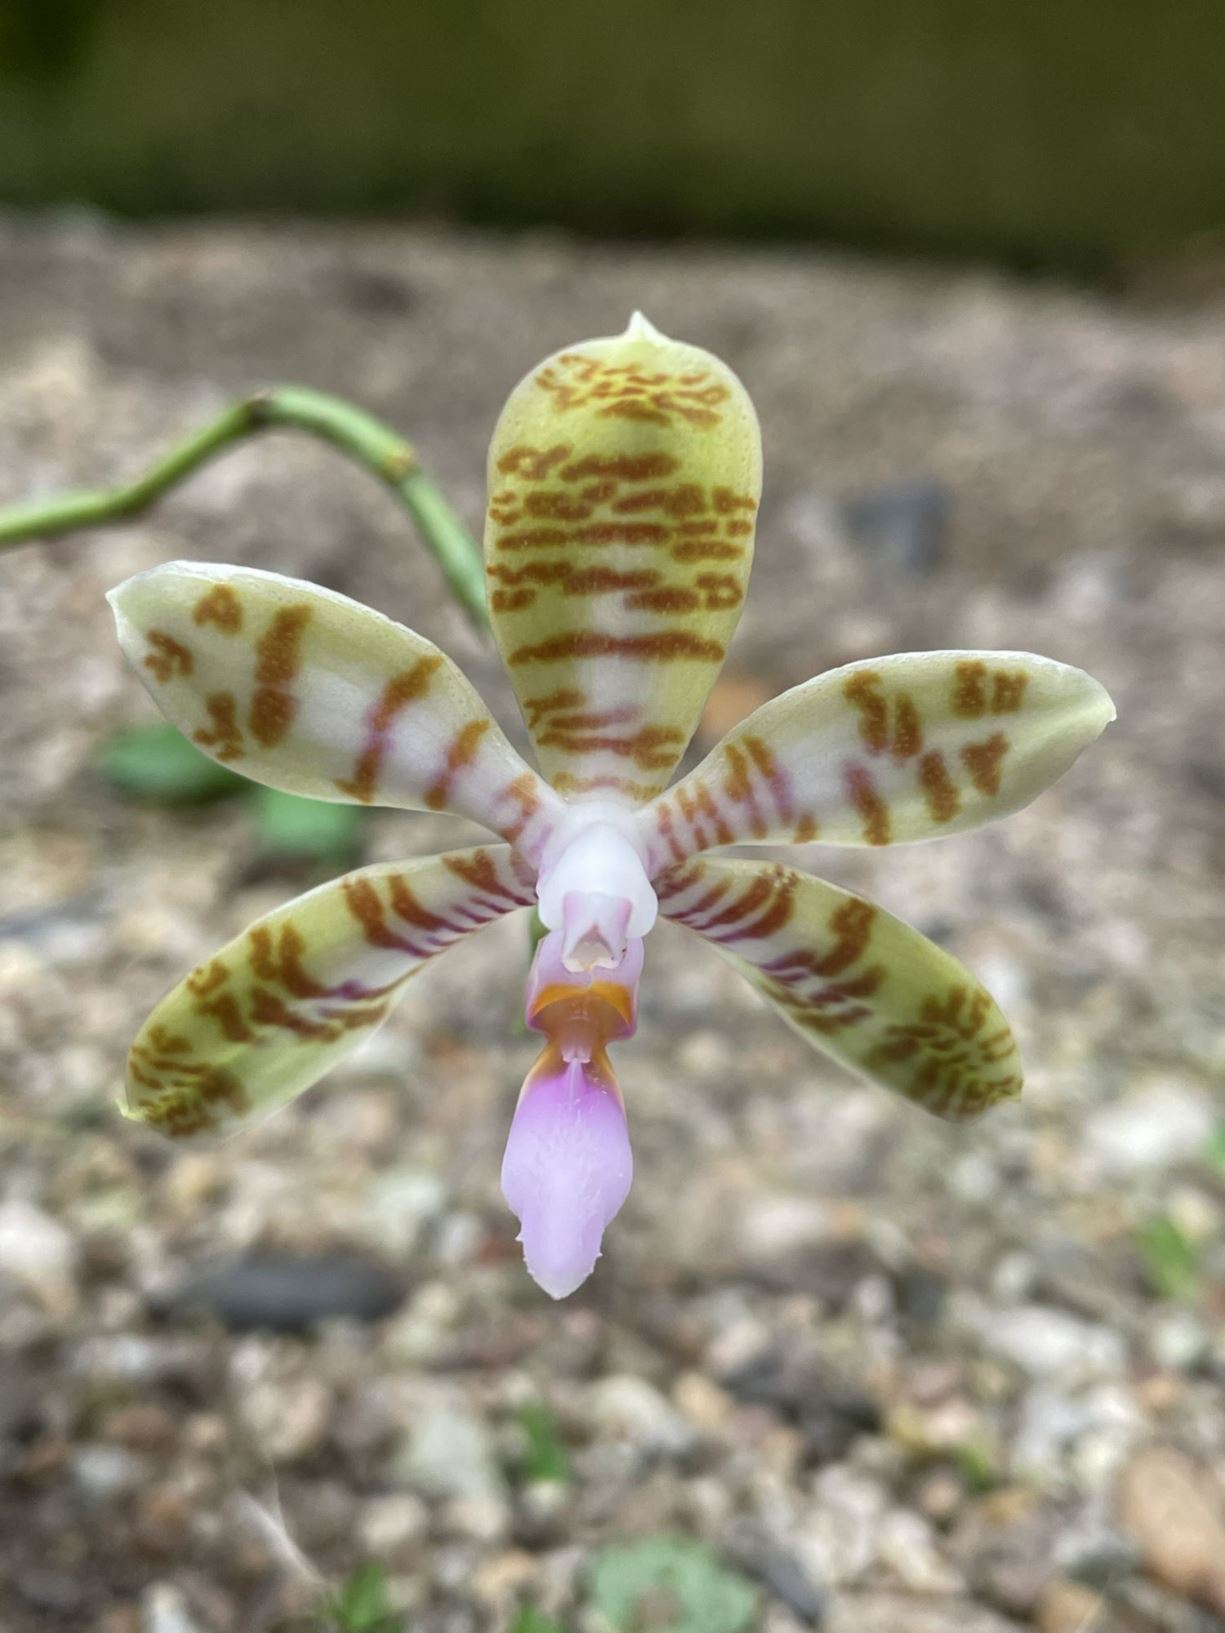 Phalaenopsis fasciata